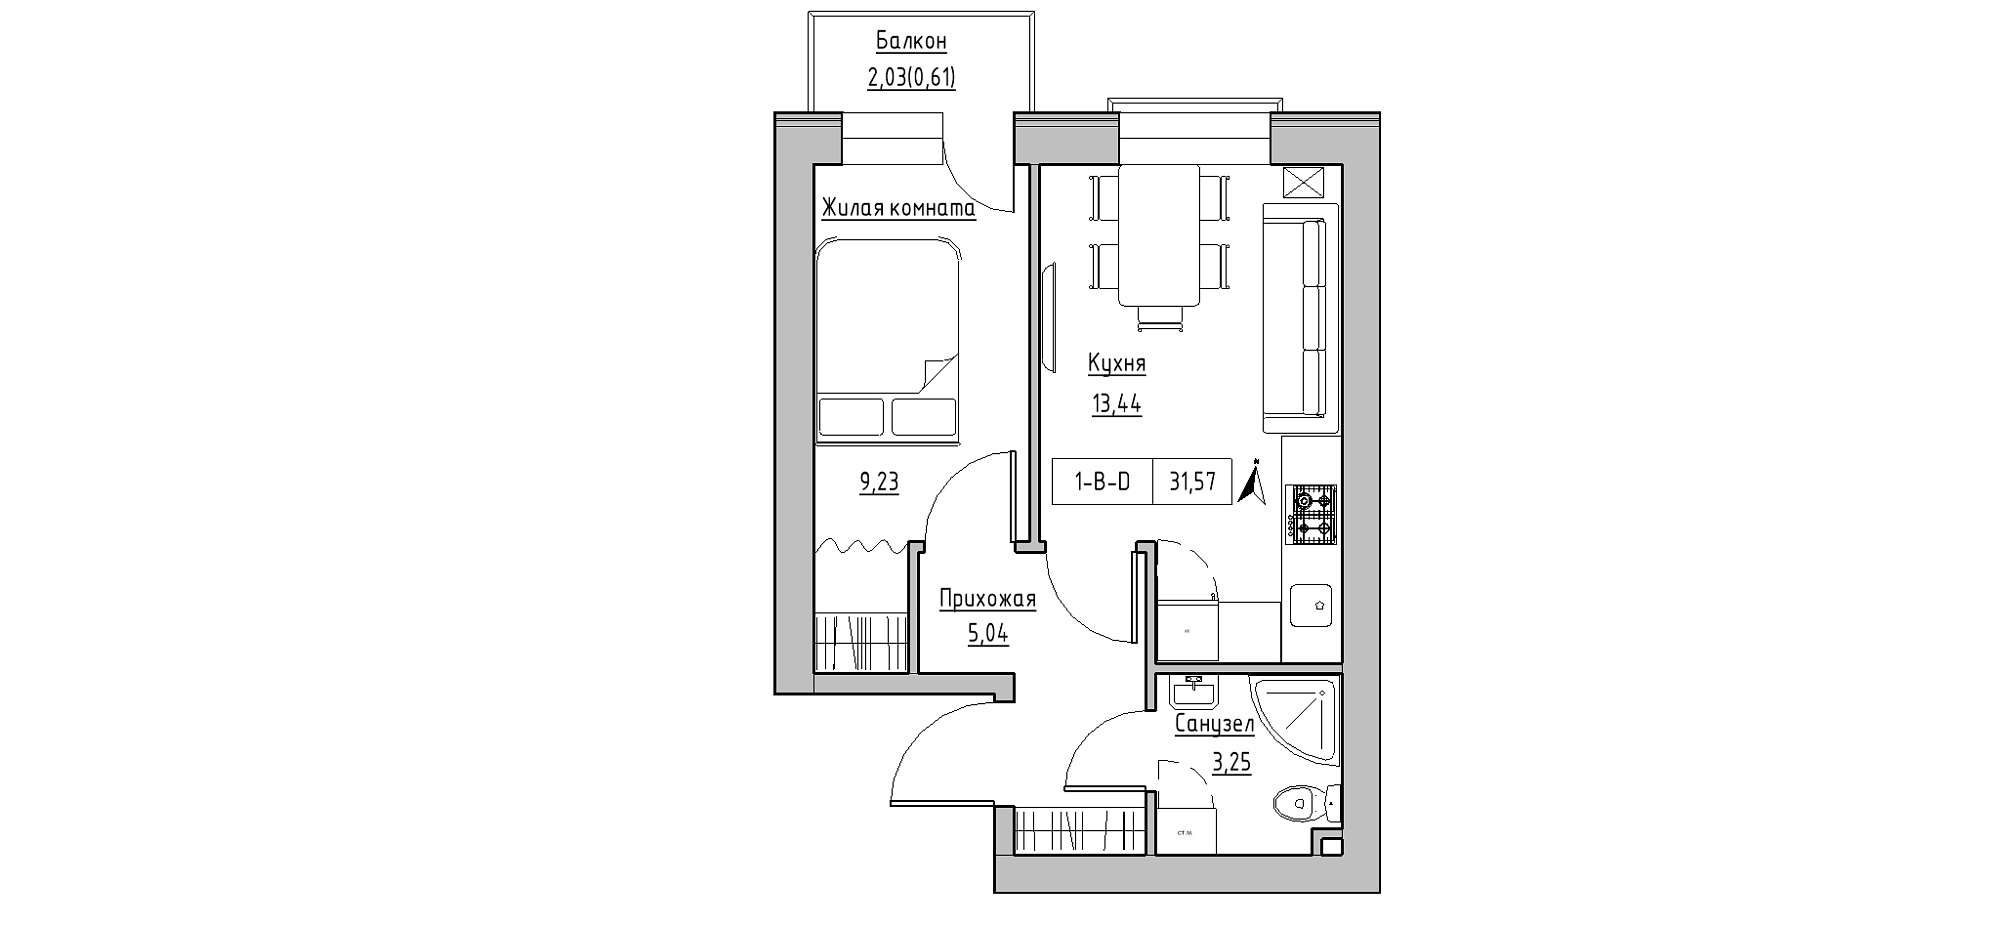 Planning 1-rm flats area 31.57m2, KS-020-04/0003.